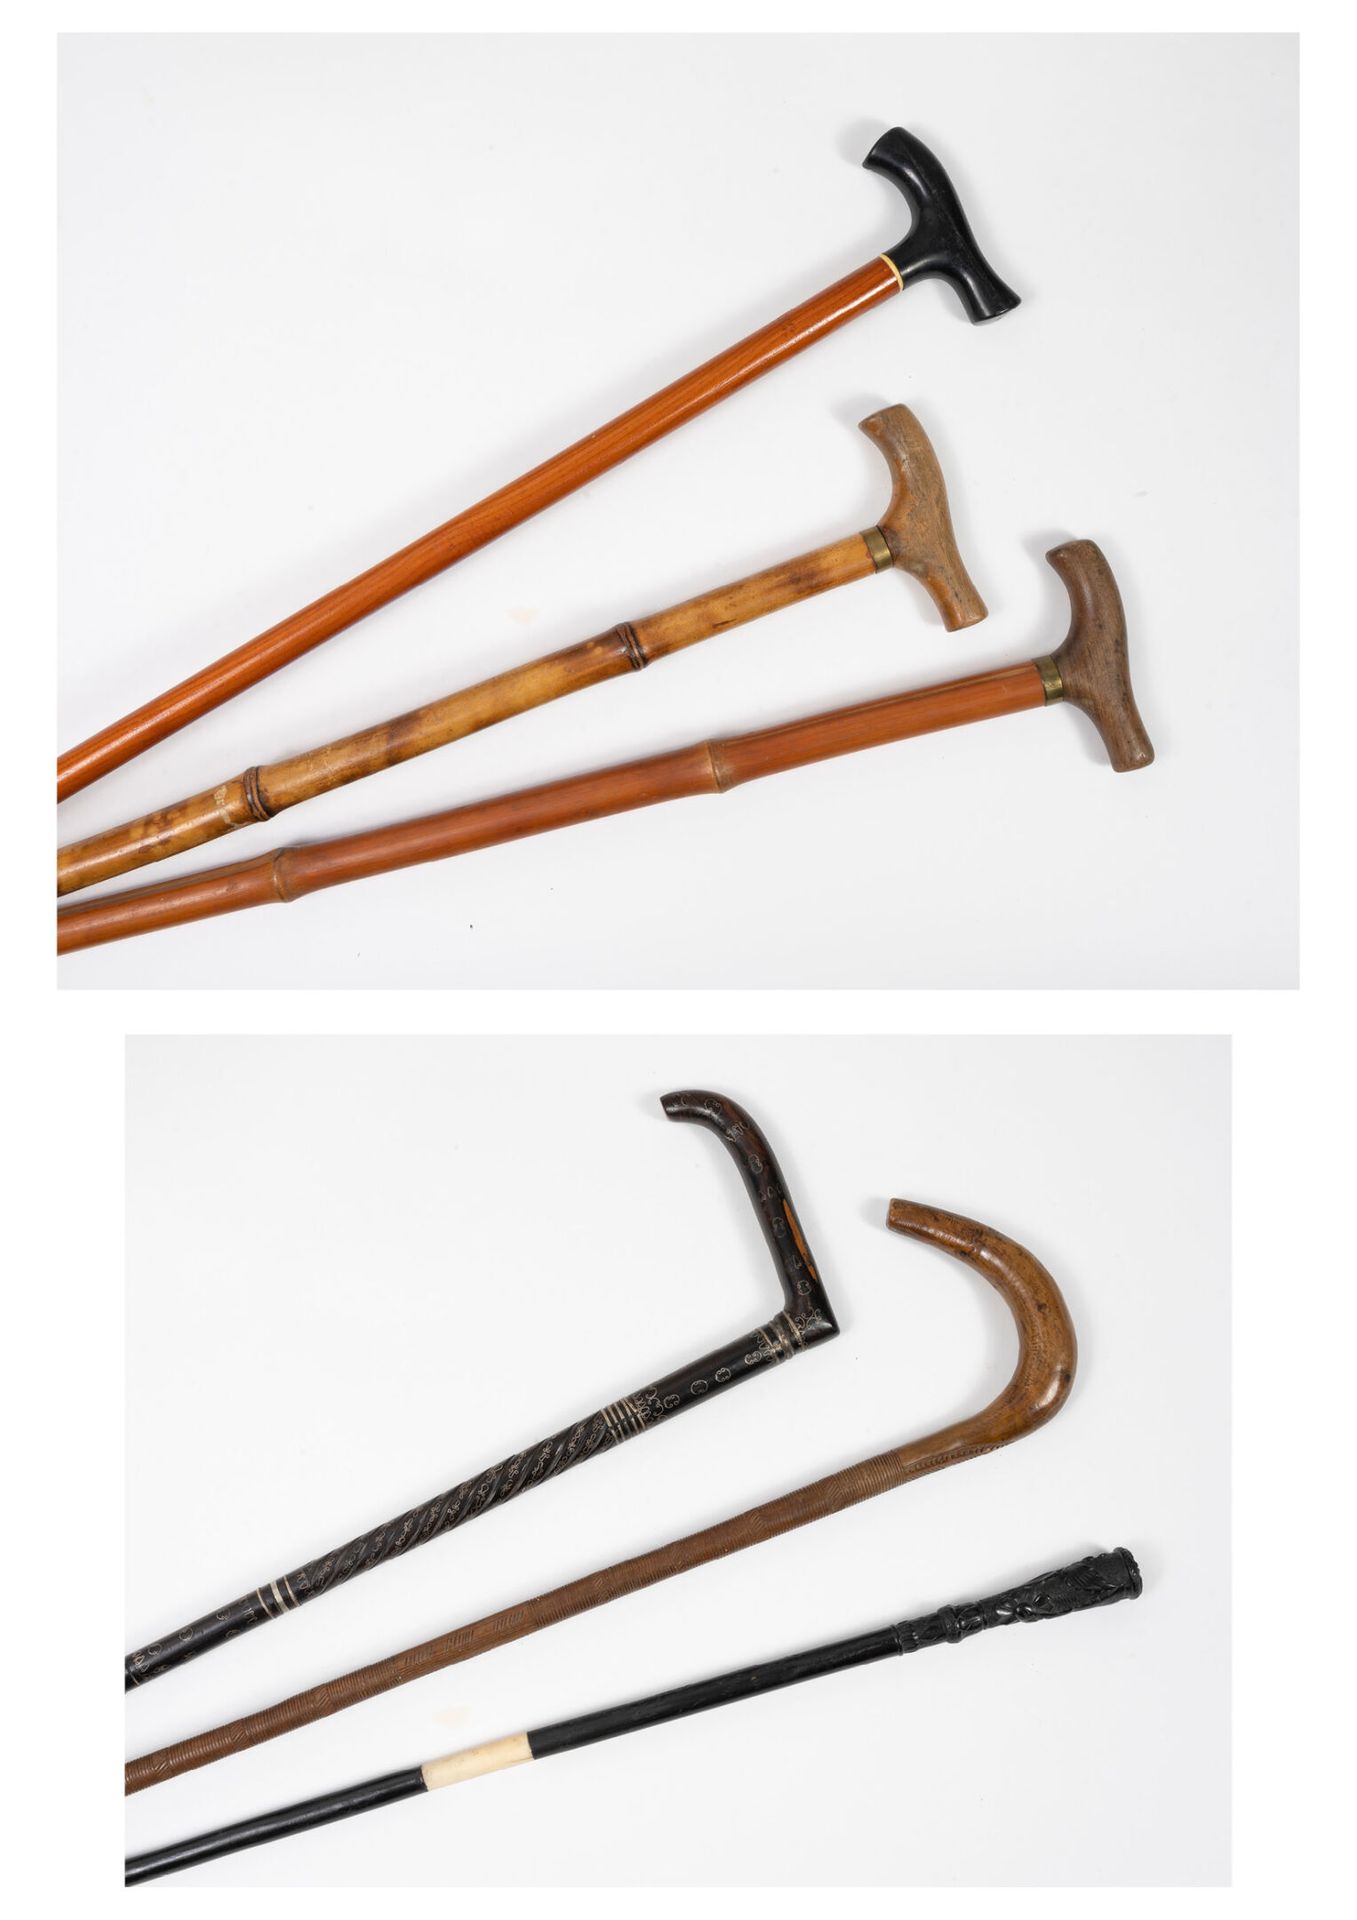 Null 一套六根木制或竹制或骨制手杖，可以是普通的，也可以是刻字的。
磨损和划痕，小事故和部件丢失。